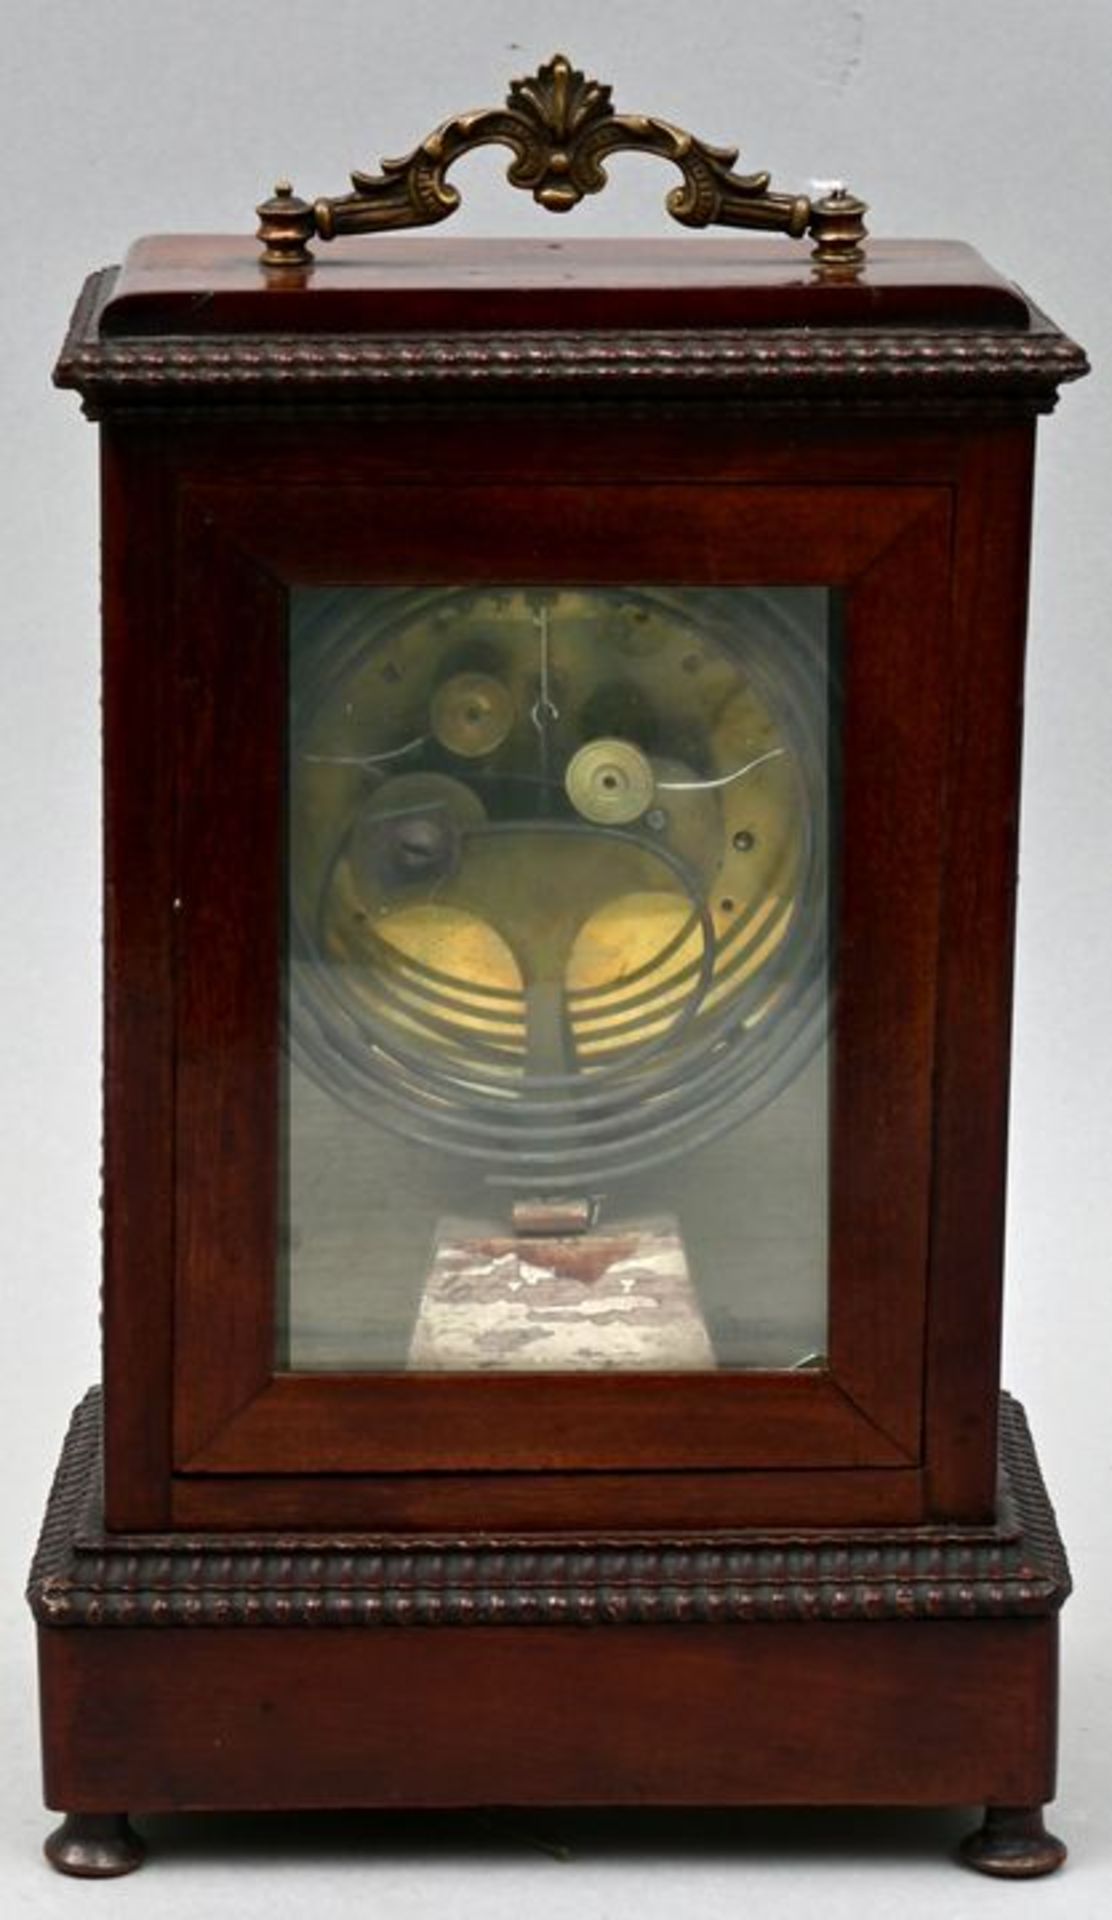 Tischuhr / Table clock - Image 3 of 7